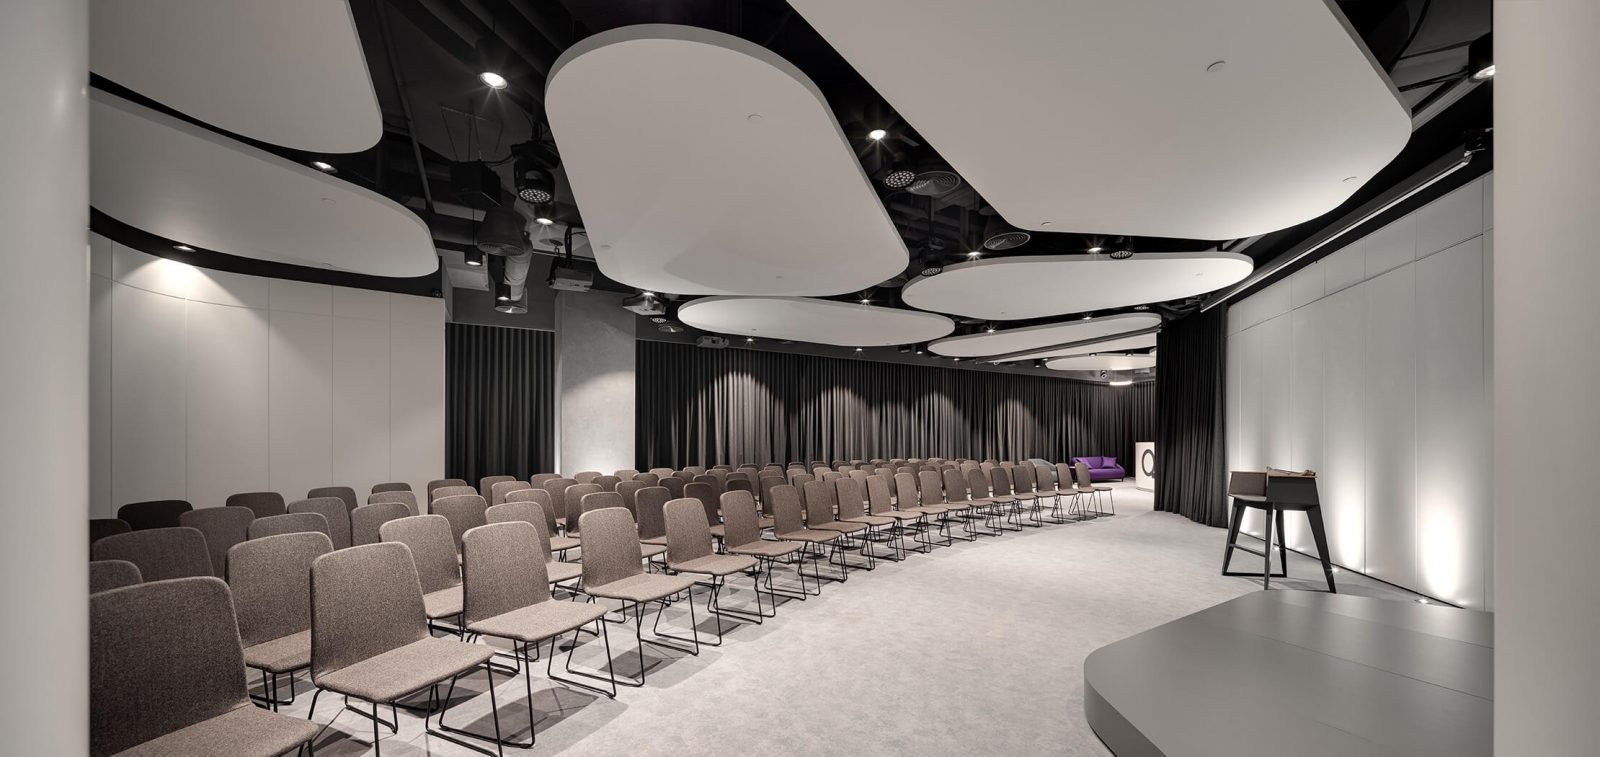 Exhibition & conference hall interior design